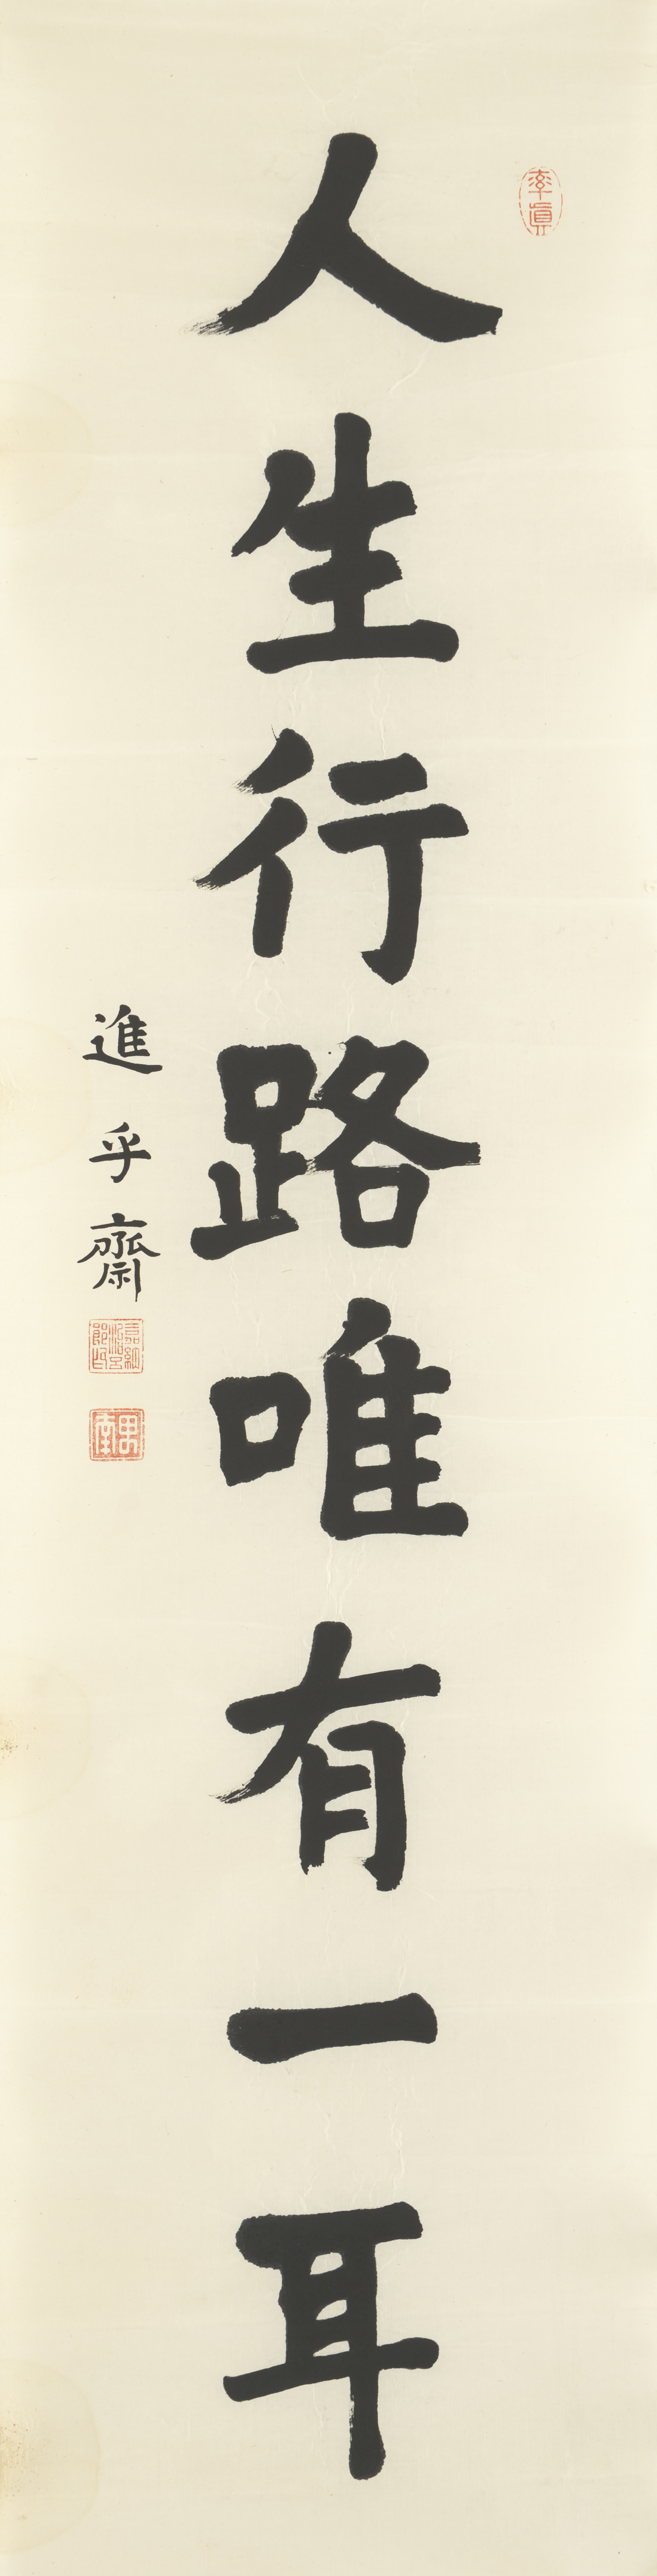 Jigoro Kano and themes of his calligraphy - Page 2 Jinsei01